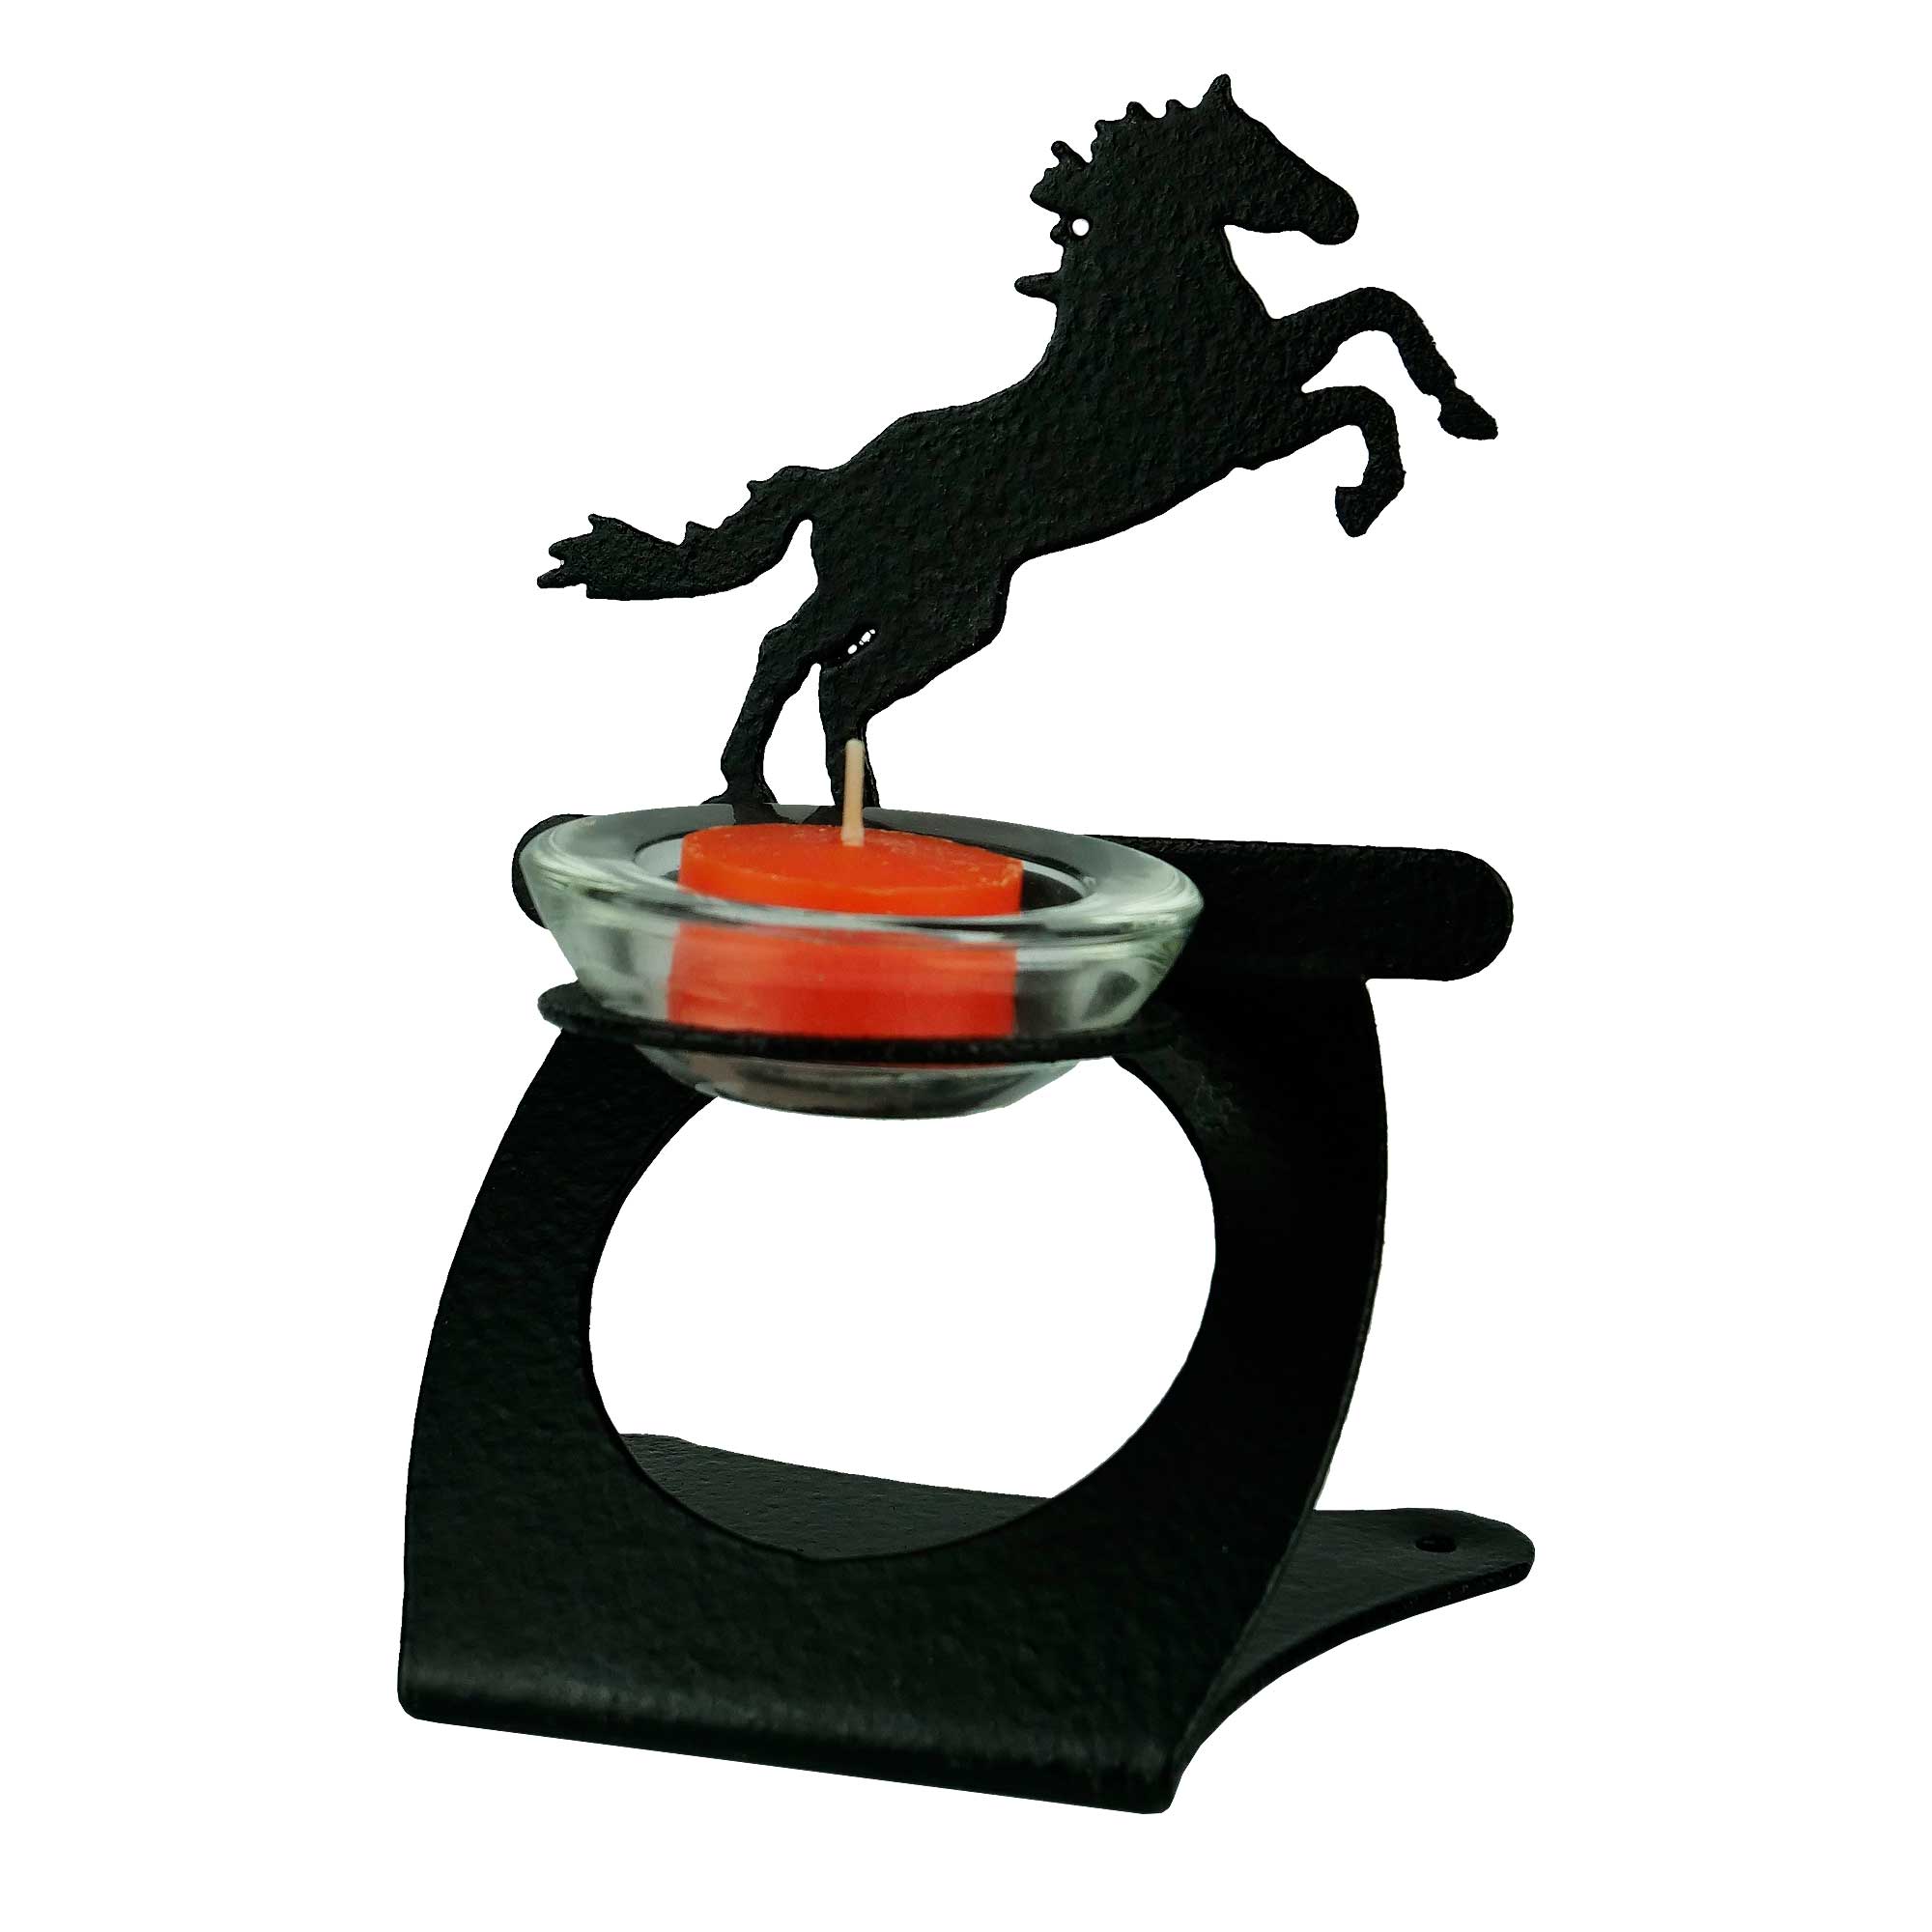 Twilight Teelichthalter Rearing Horse von The Profiles Range